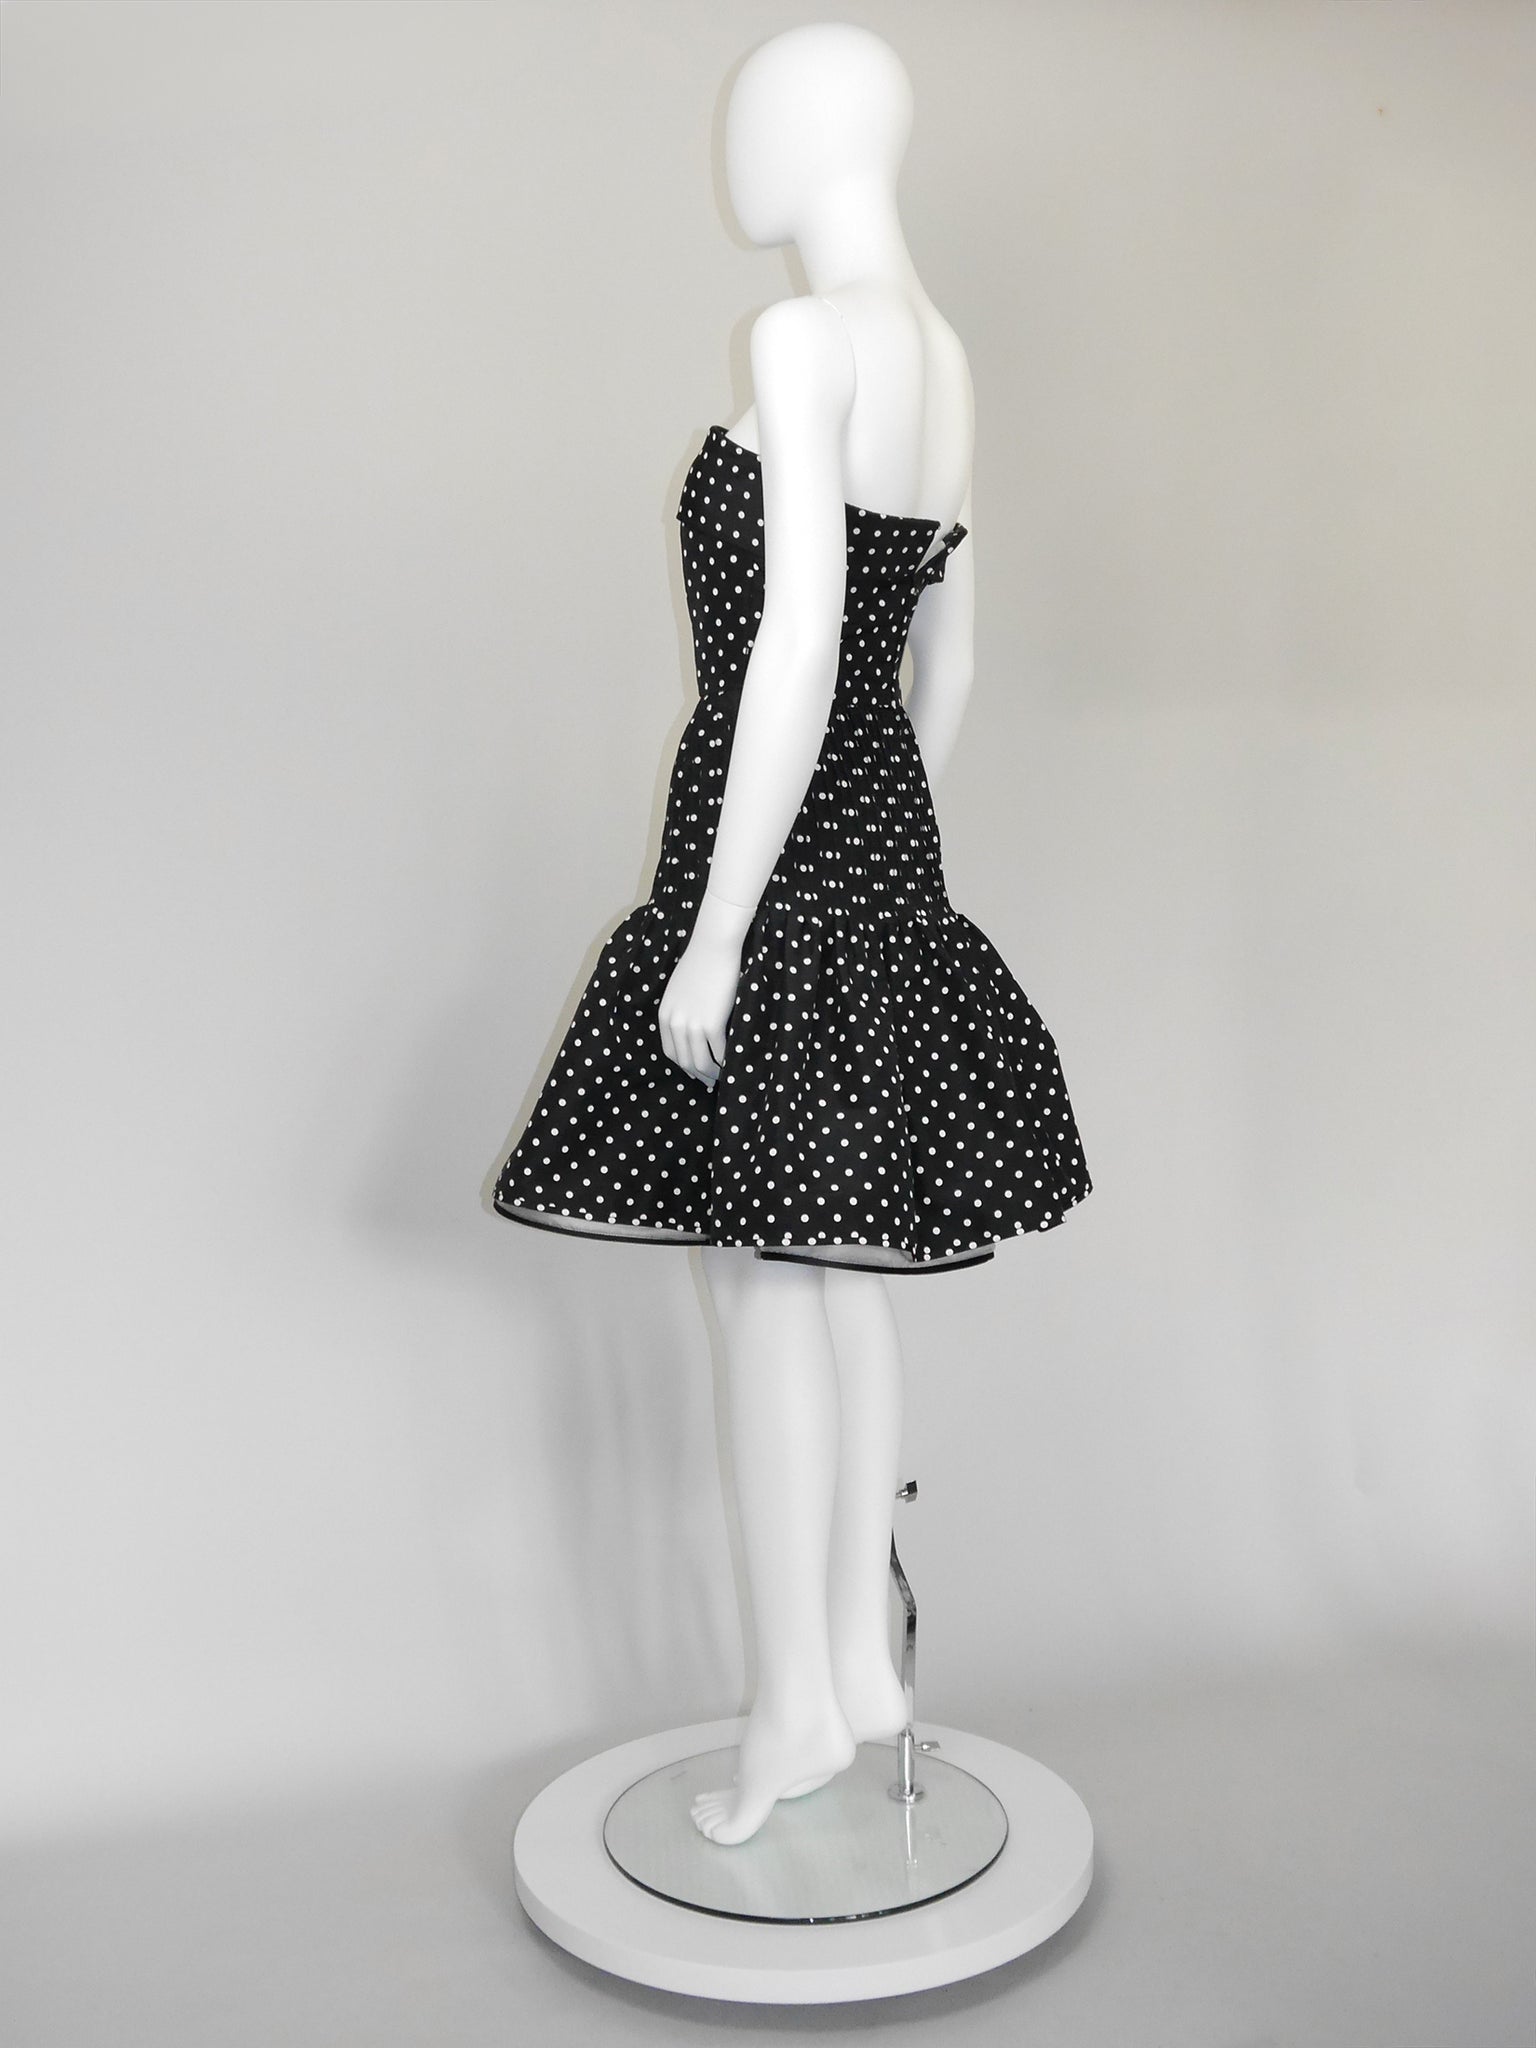 VALENTINO 1980s Vintage Black & White Polka Dot Cocktail Dress Size XS